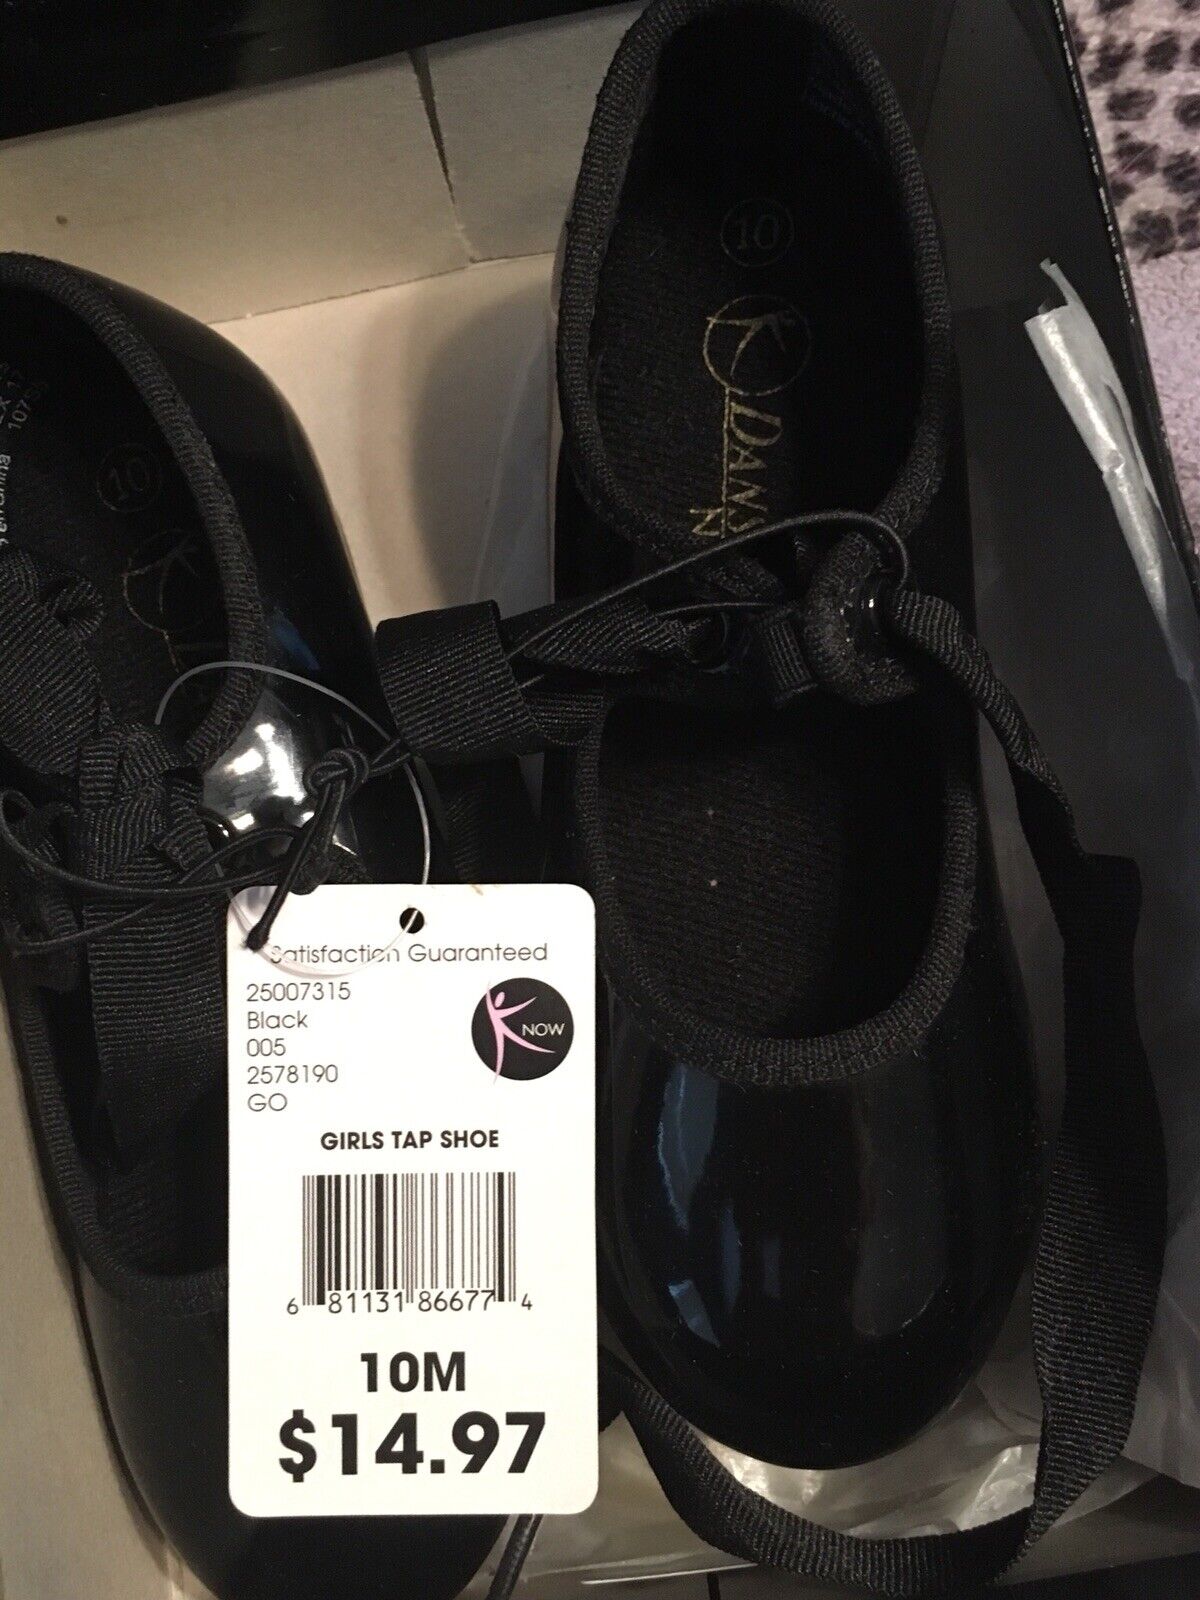 DANSKIN NOW Girls Size 10M Black Tap Shoes -NEW!!